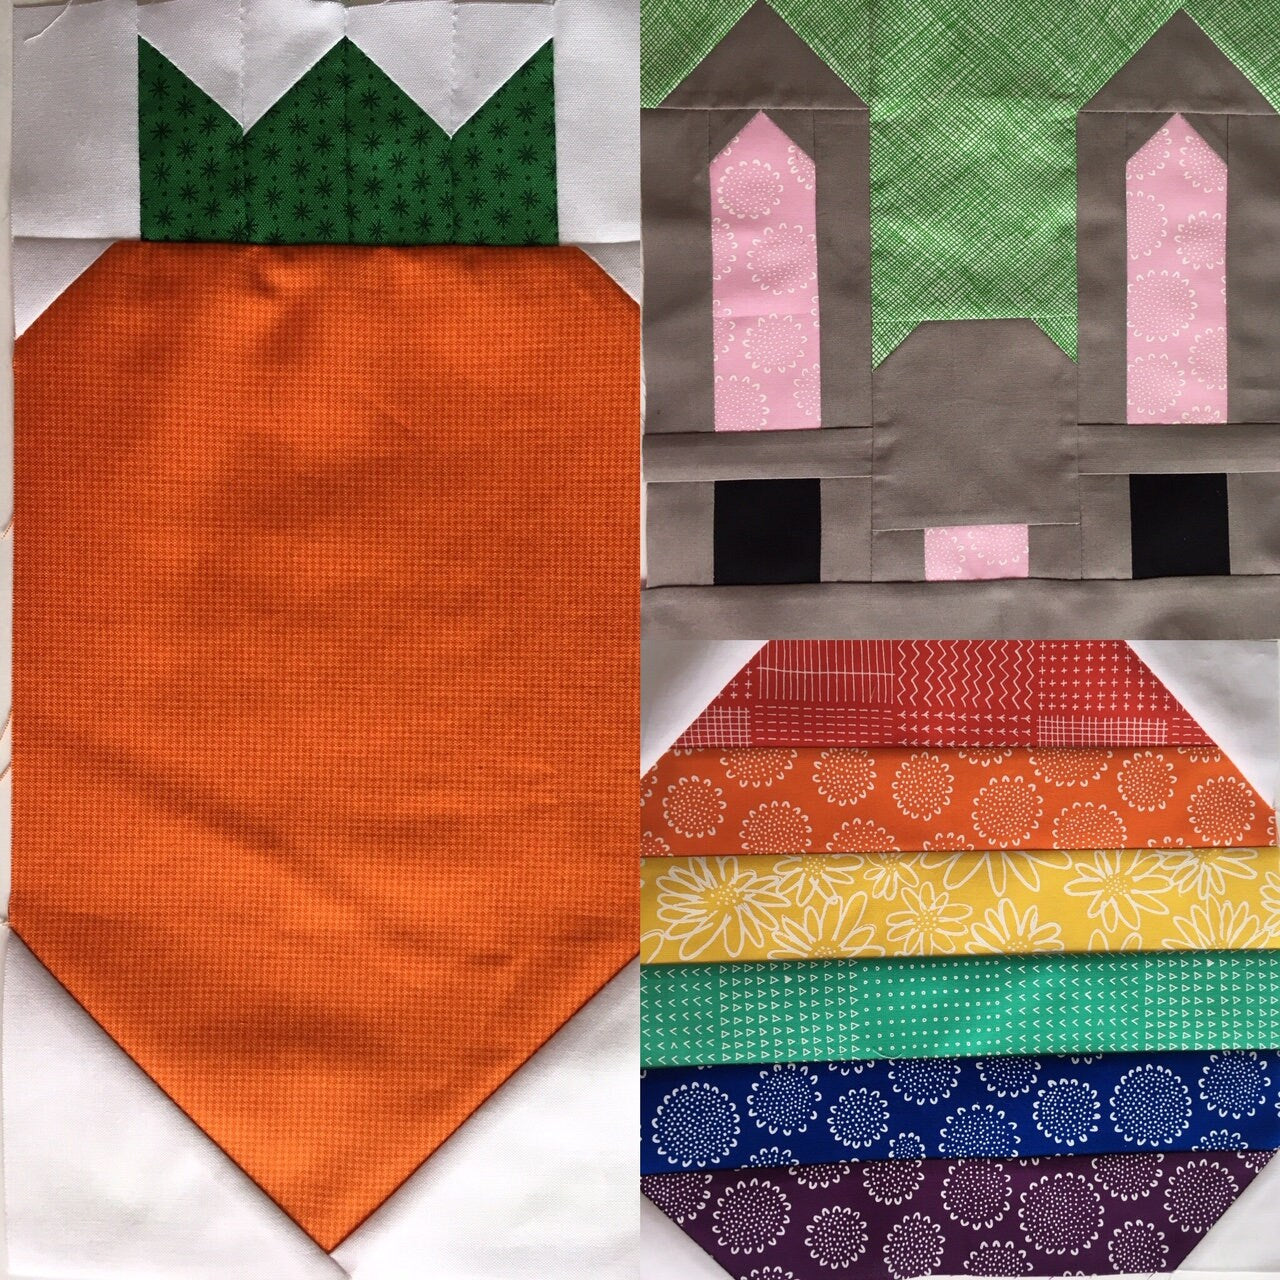 Rabbit and Carrot Quilt Block Patterns Set with Bonus Rainbow Easter Egg Block Pattern, digital quilt block patterns